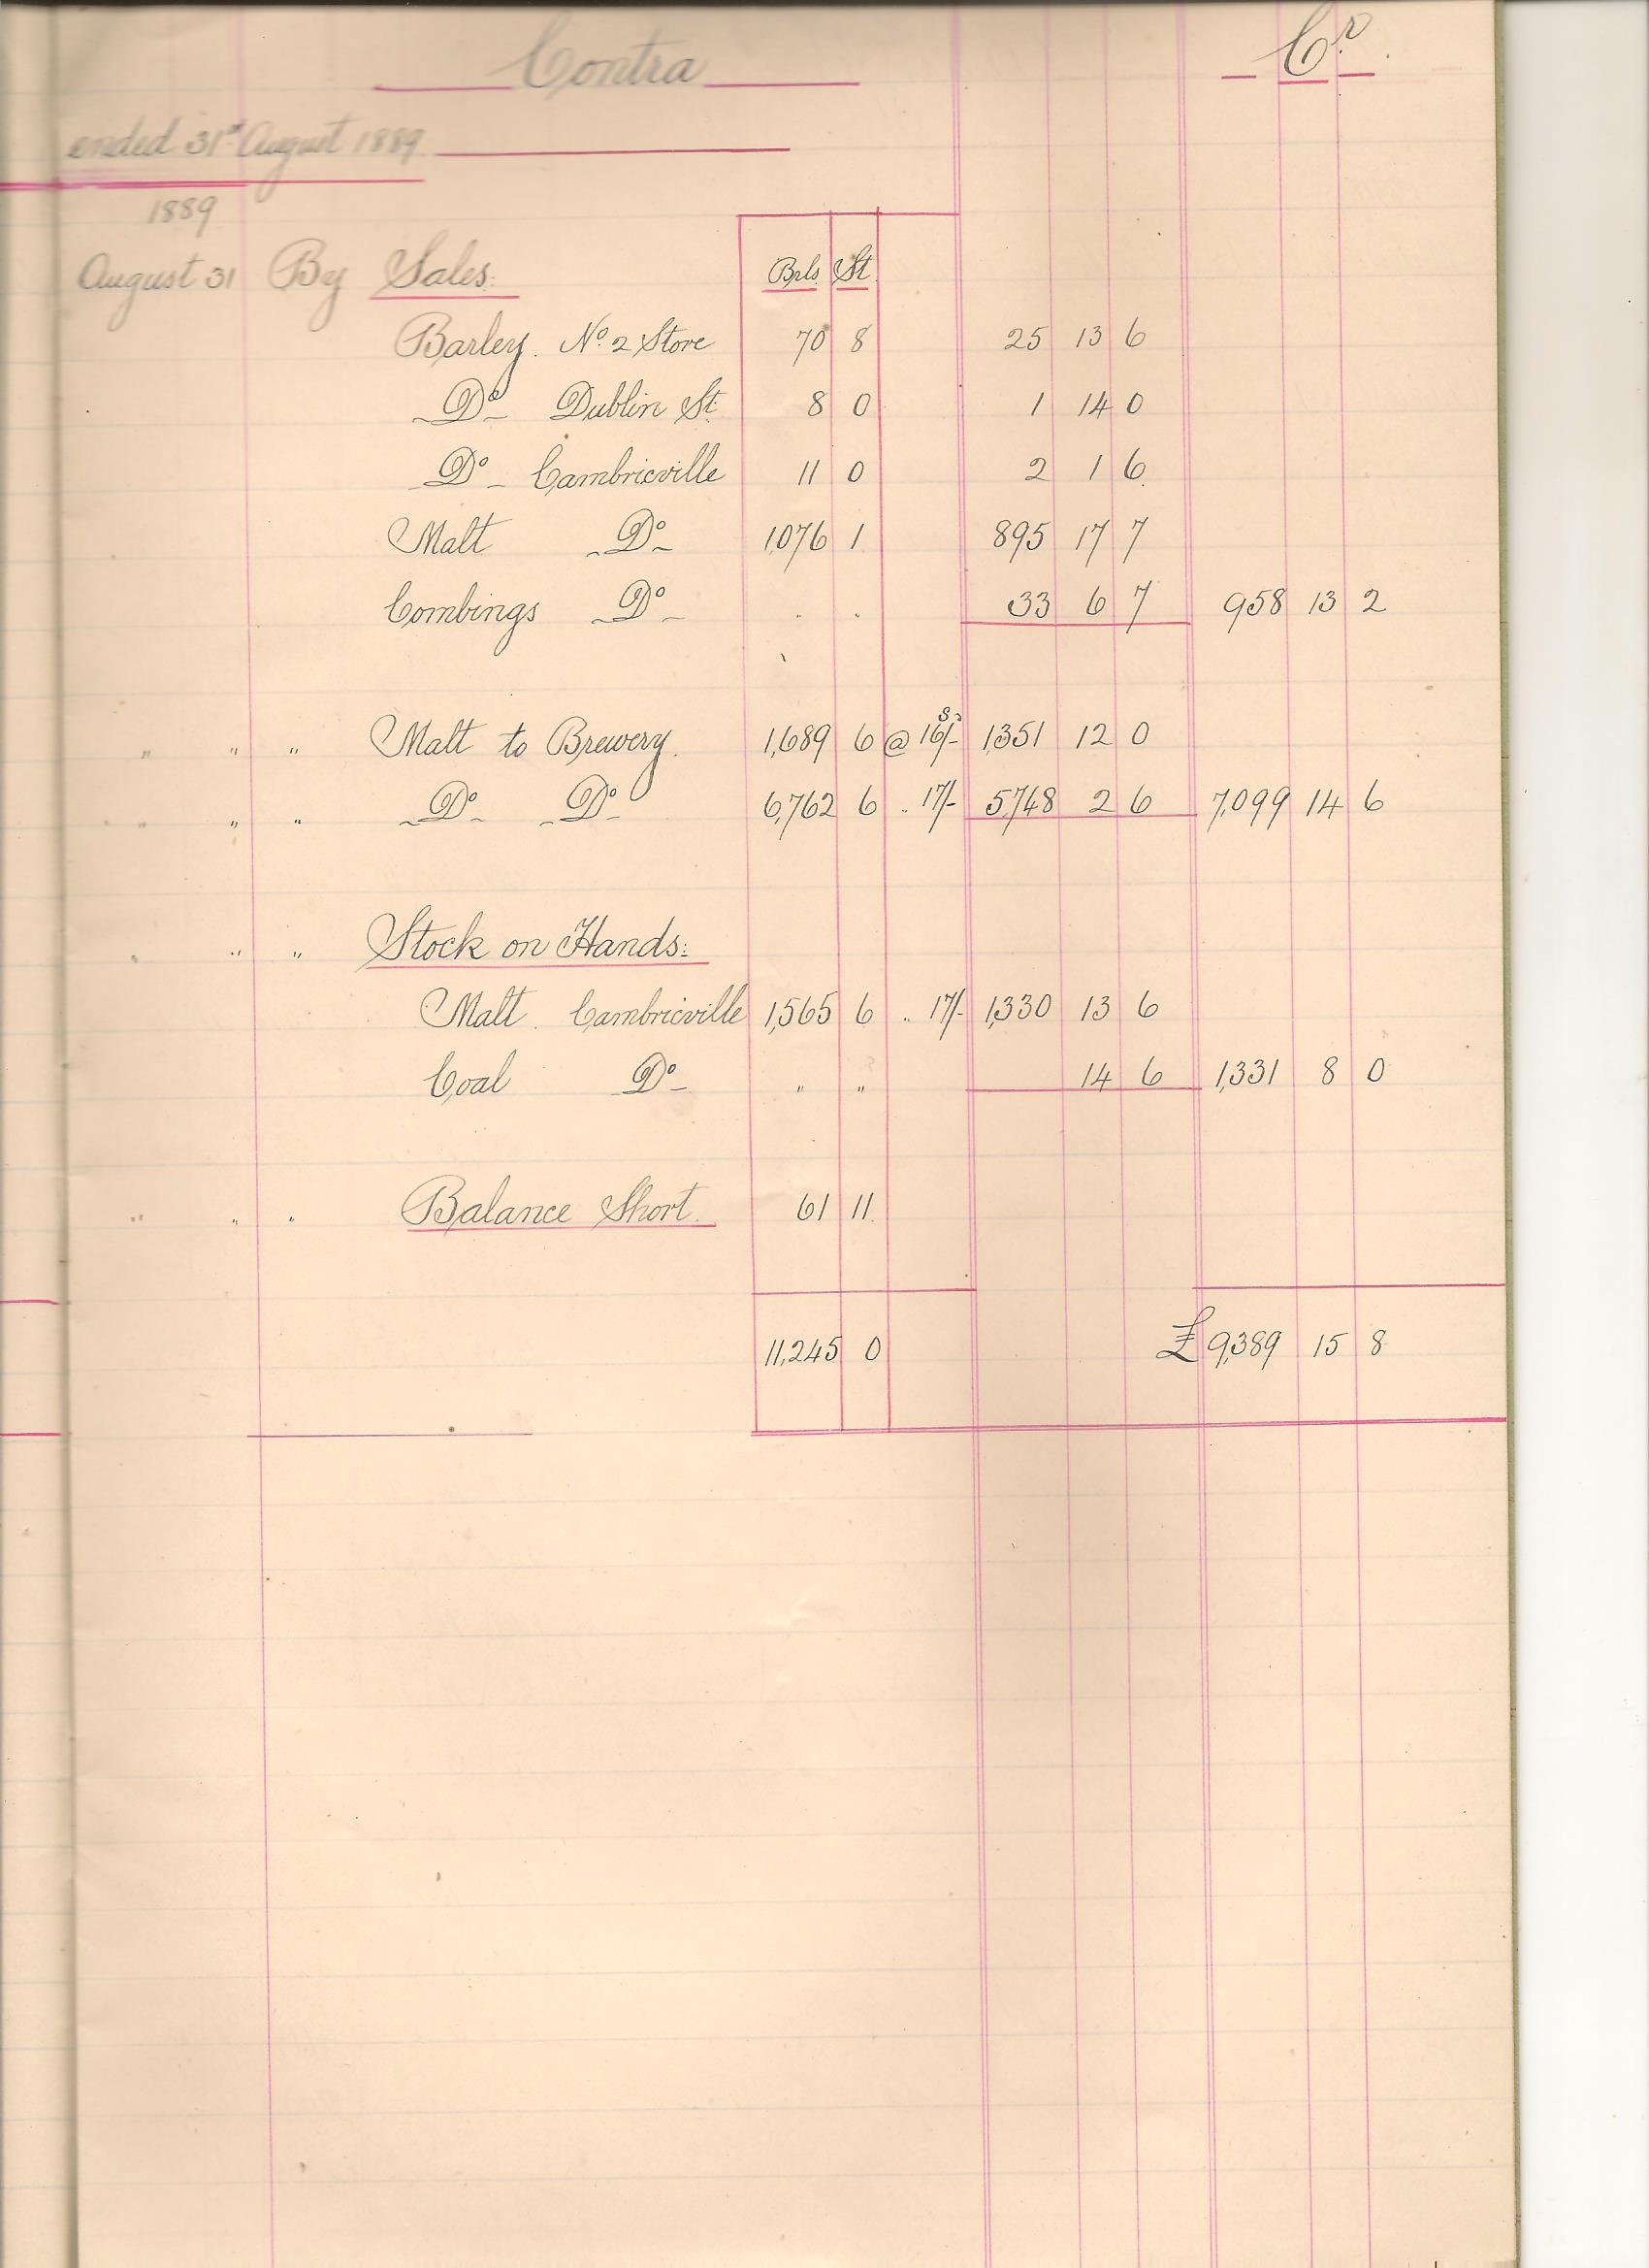 Macardle Moore - Accounts - Aug - 1889